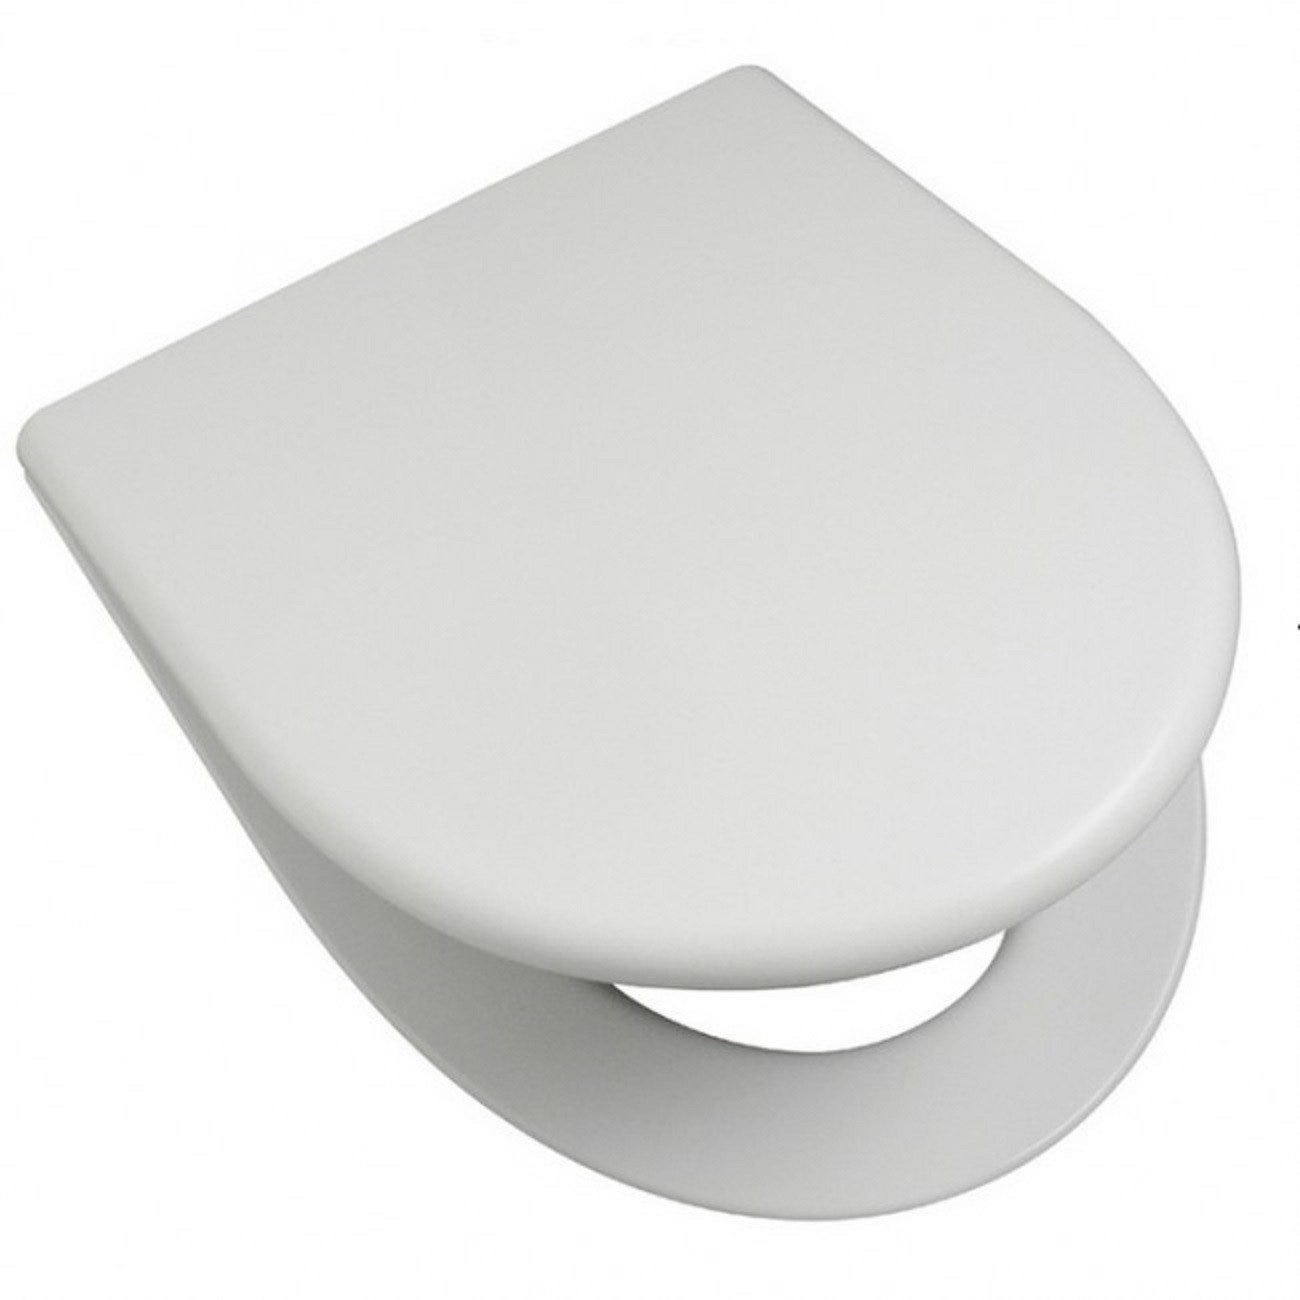 Asiento tapa wc adaptable para el modelo Marina horizontal de Gala.